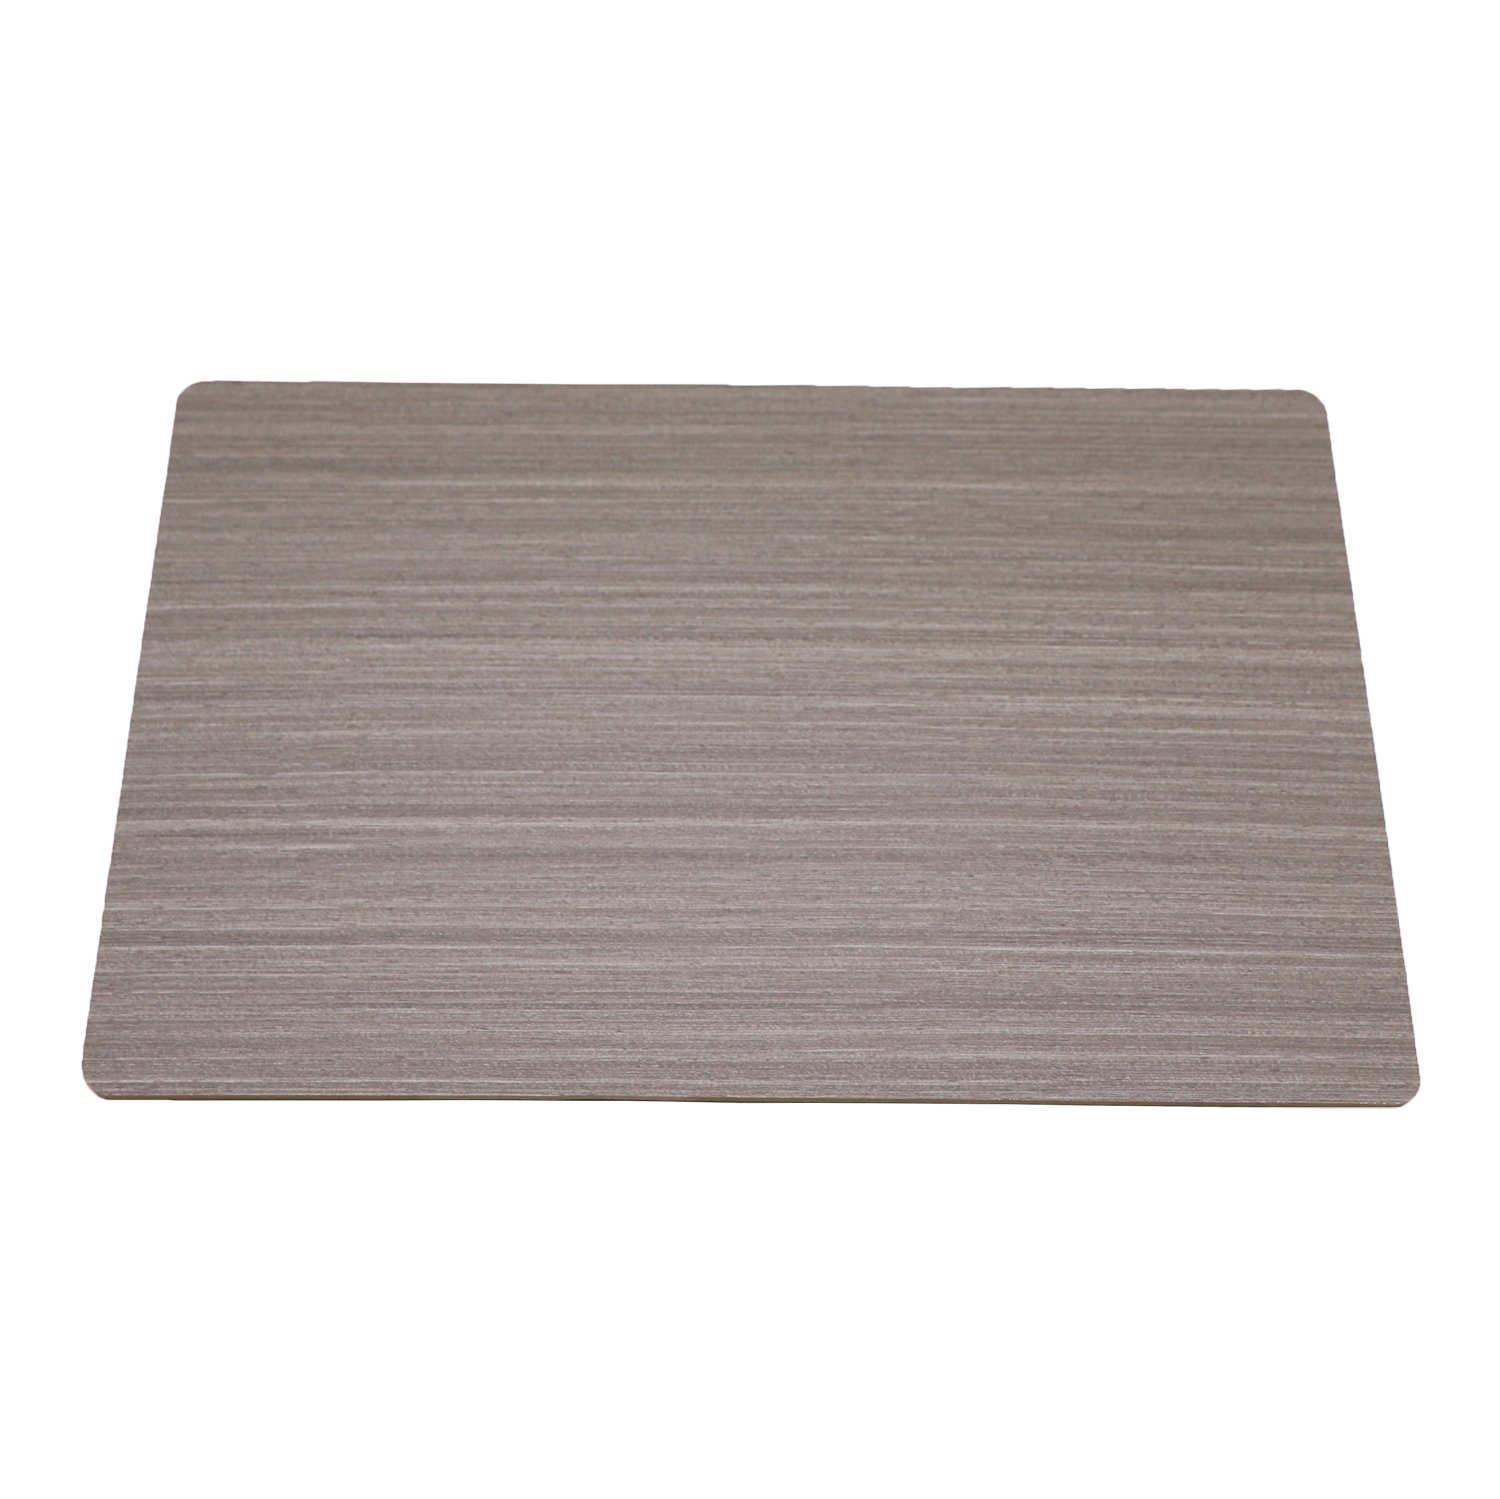 High Quality Wood Grain Film Faced MDF Board Wholesale Melamine Fiberboard for Decoration